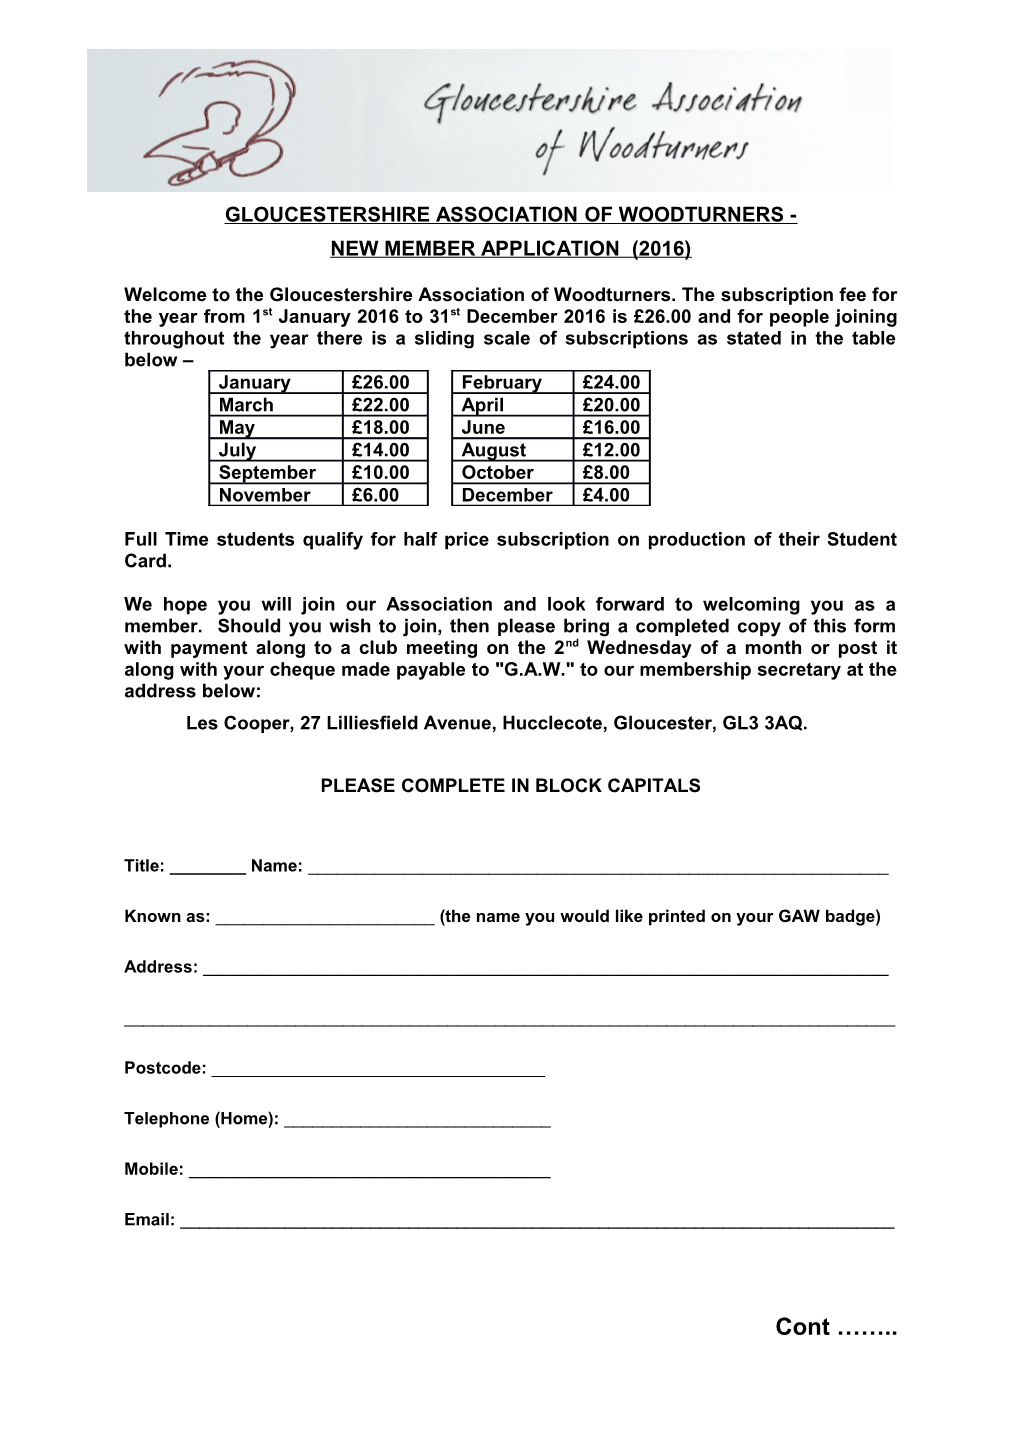 Gloucestershire Association of Woodturners -Membership Application